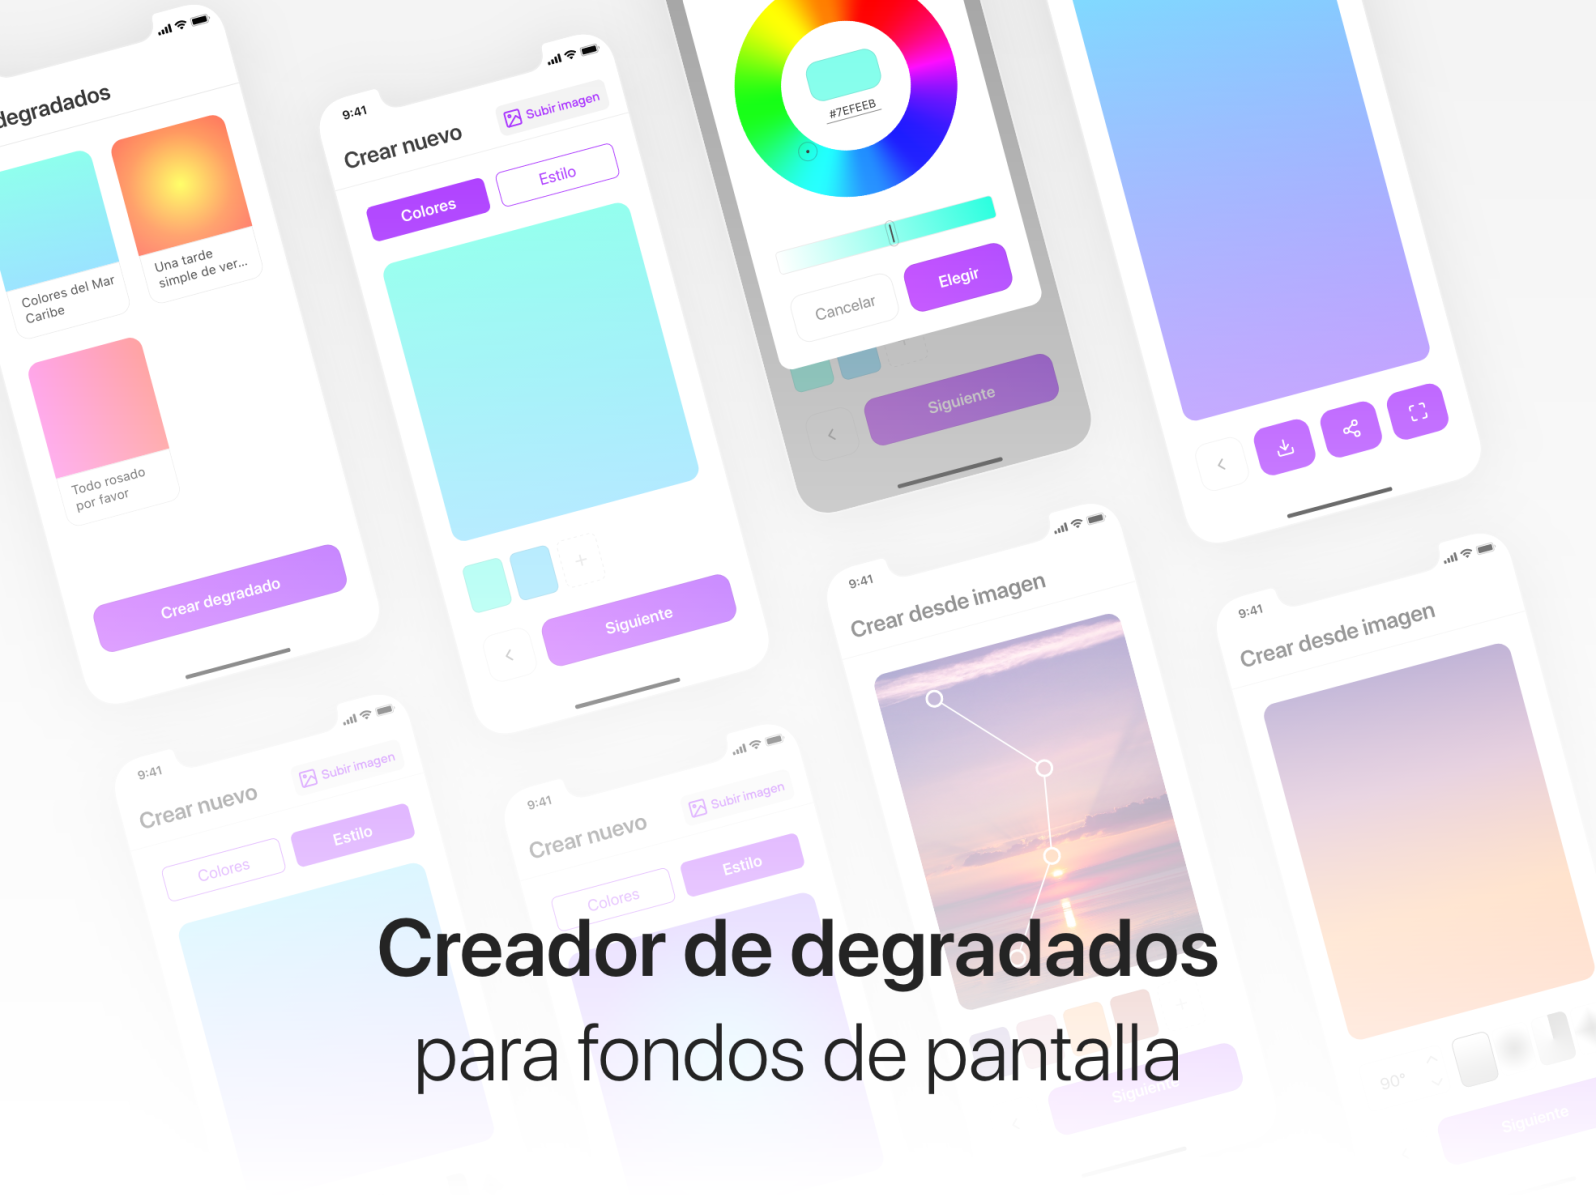 Creador de degradados para fondos de pantalla - App concept by Leandro  Torres on Dribbble